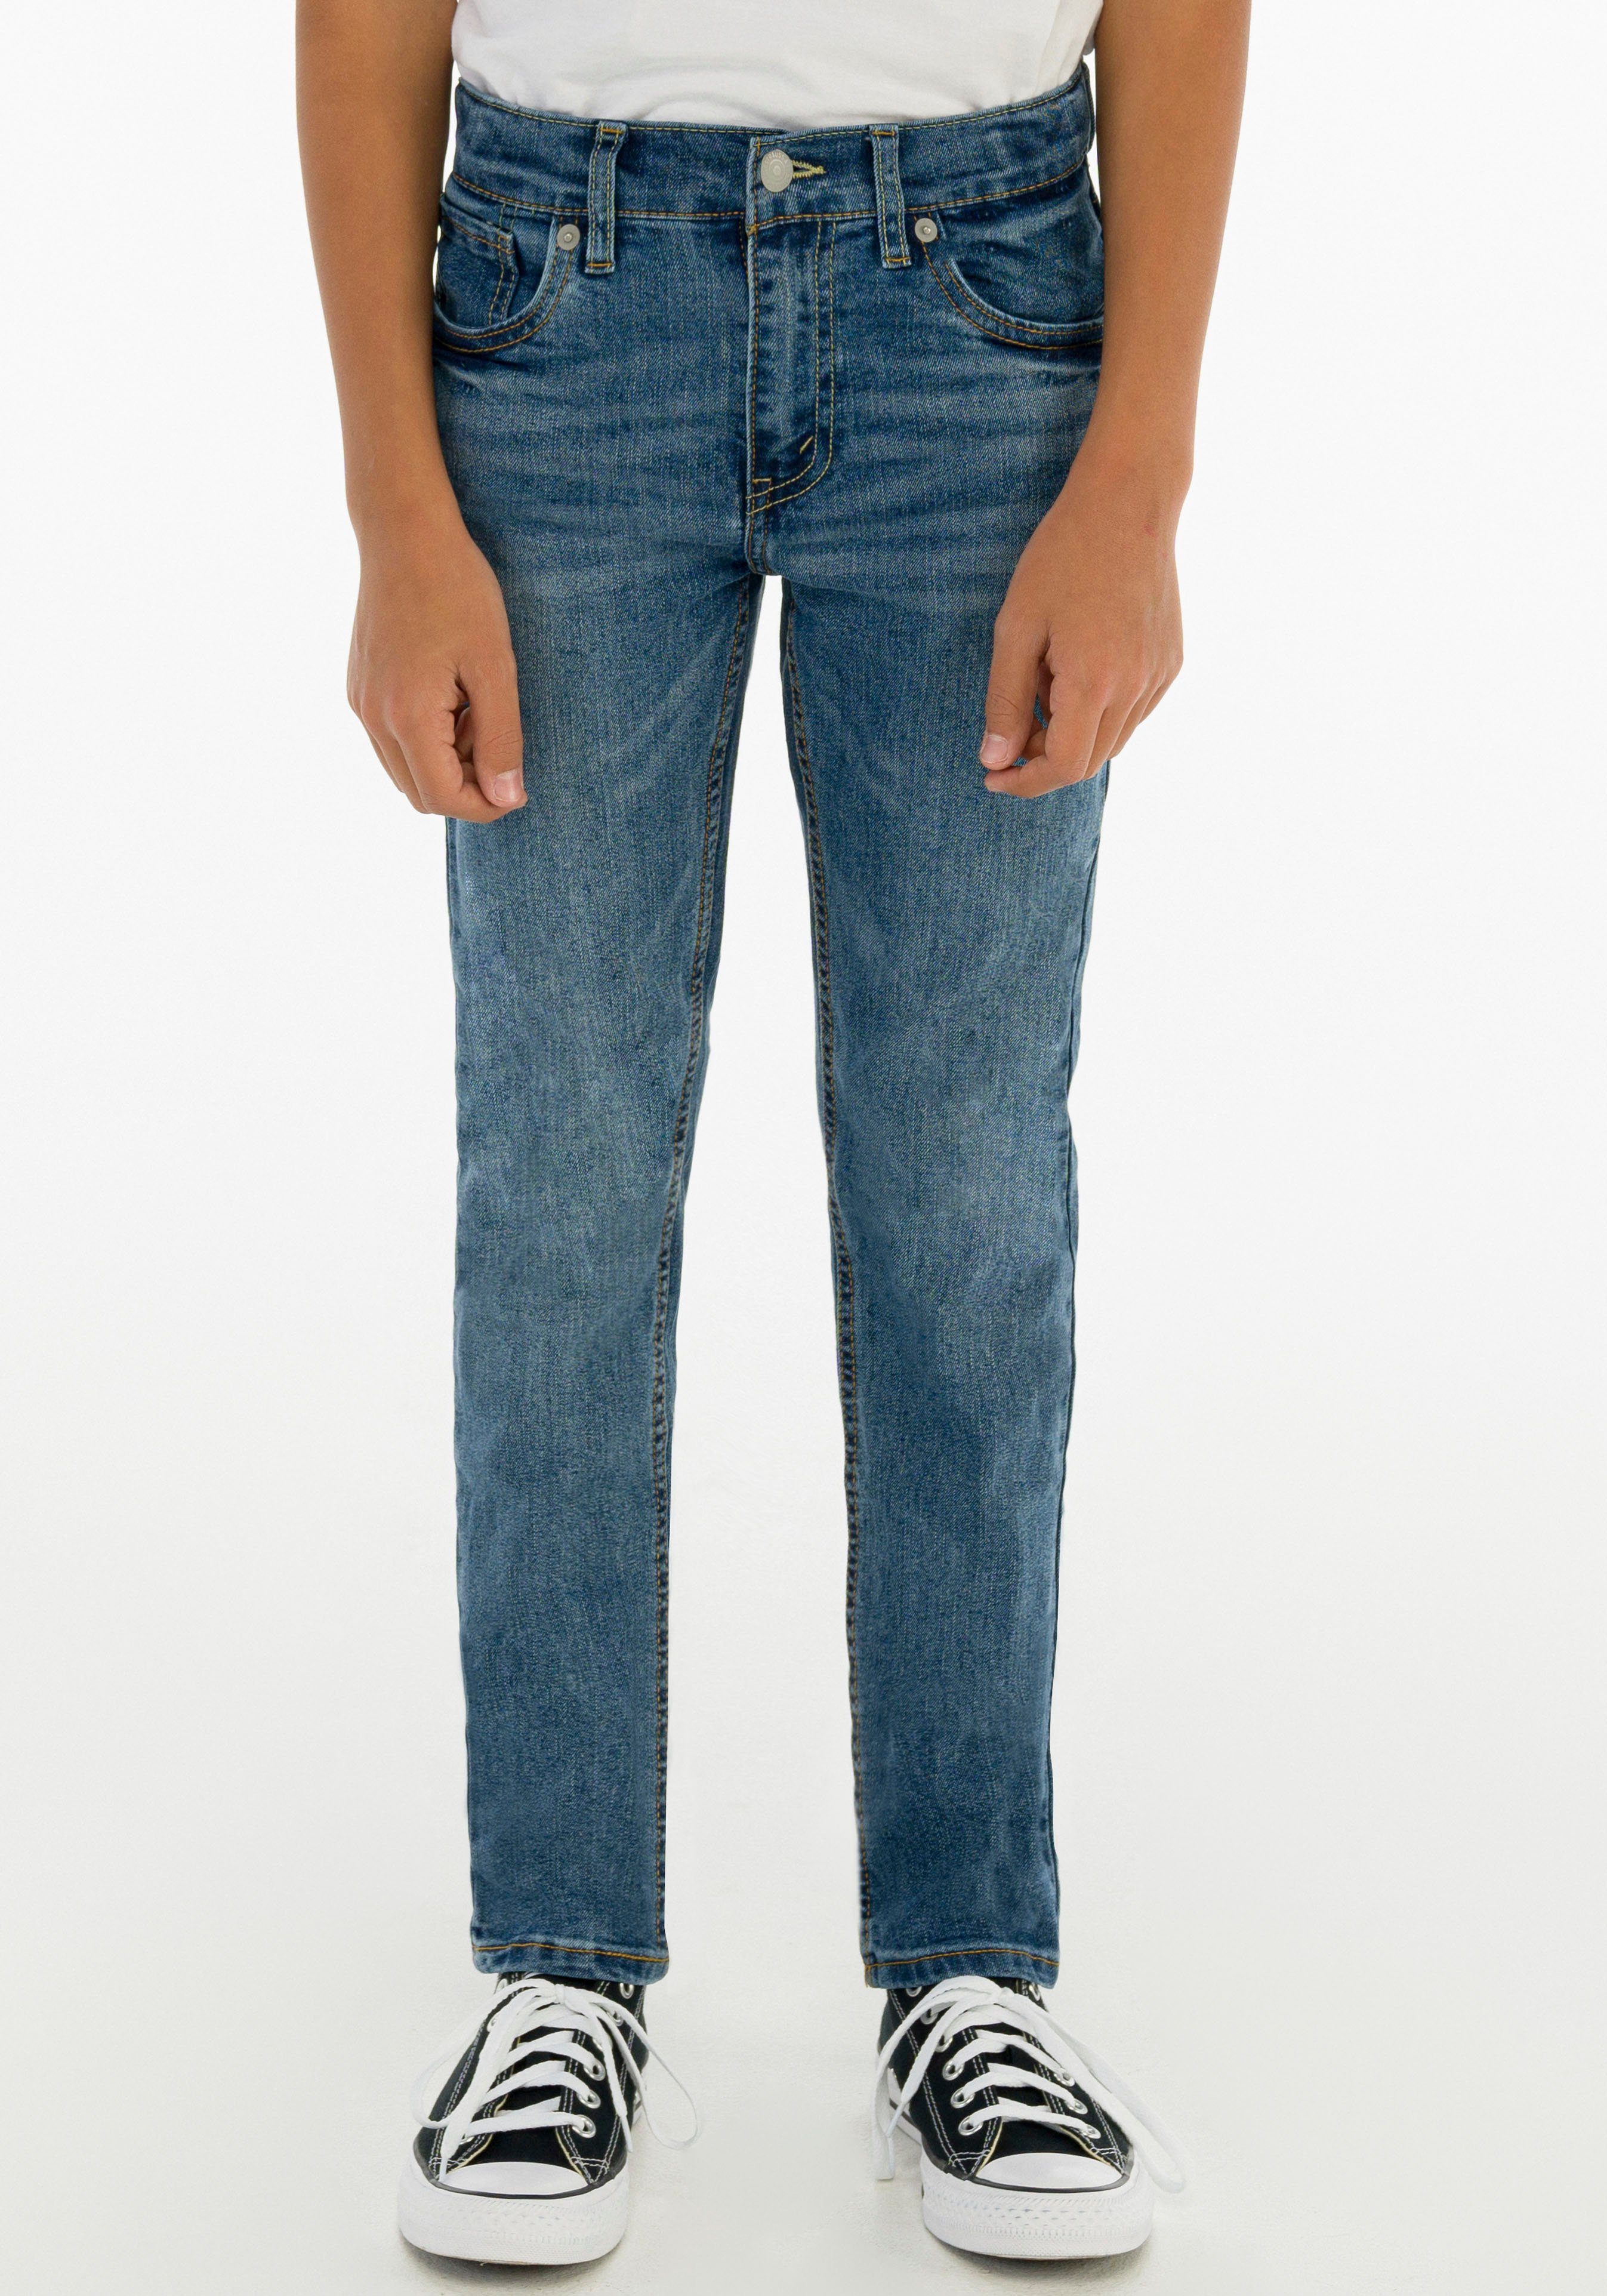 einzigartiger Laden Levi's® Kids Skinny-fit-Jeans 510 used SKINNY for denim bue FIT BOYS JEANS mid